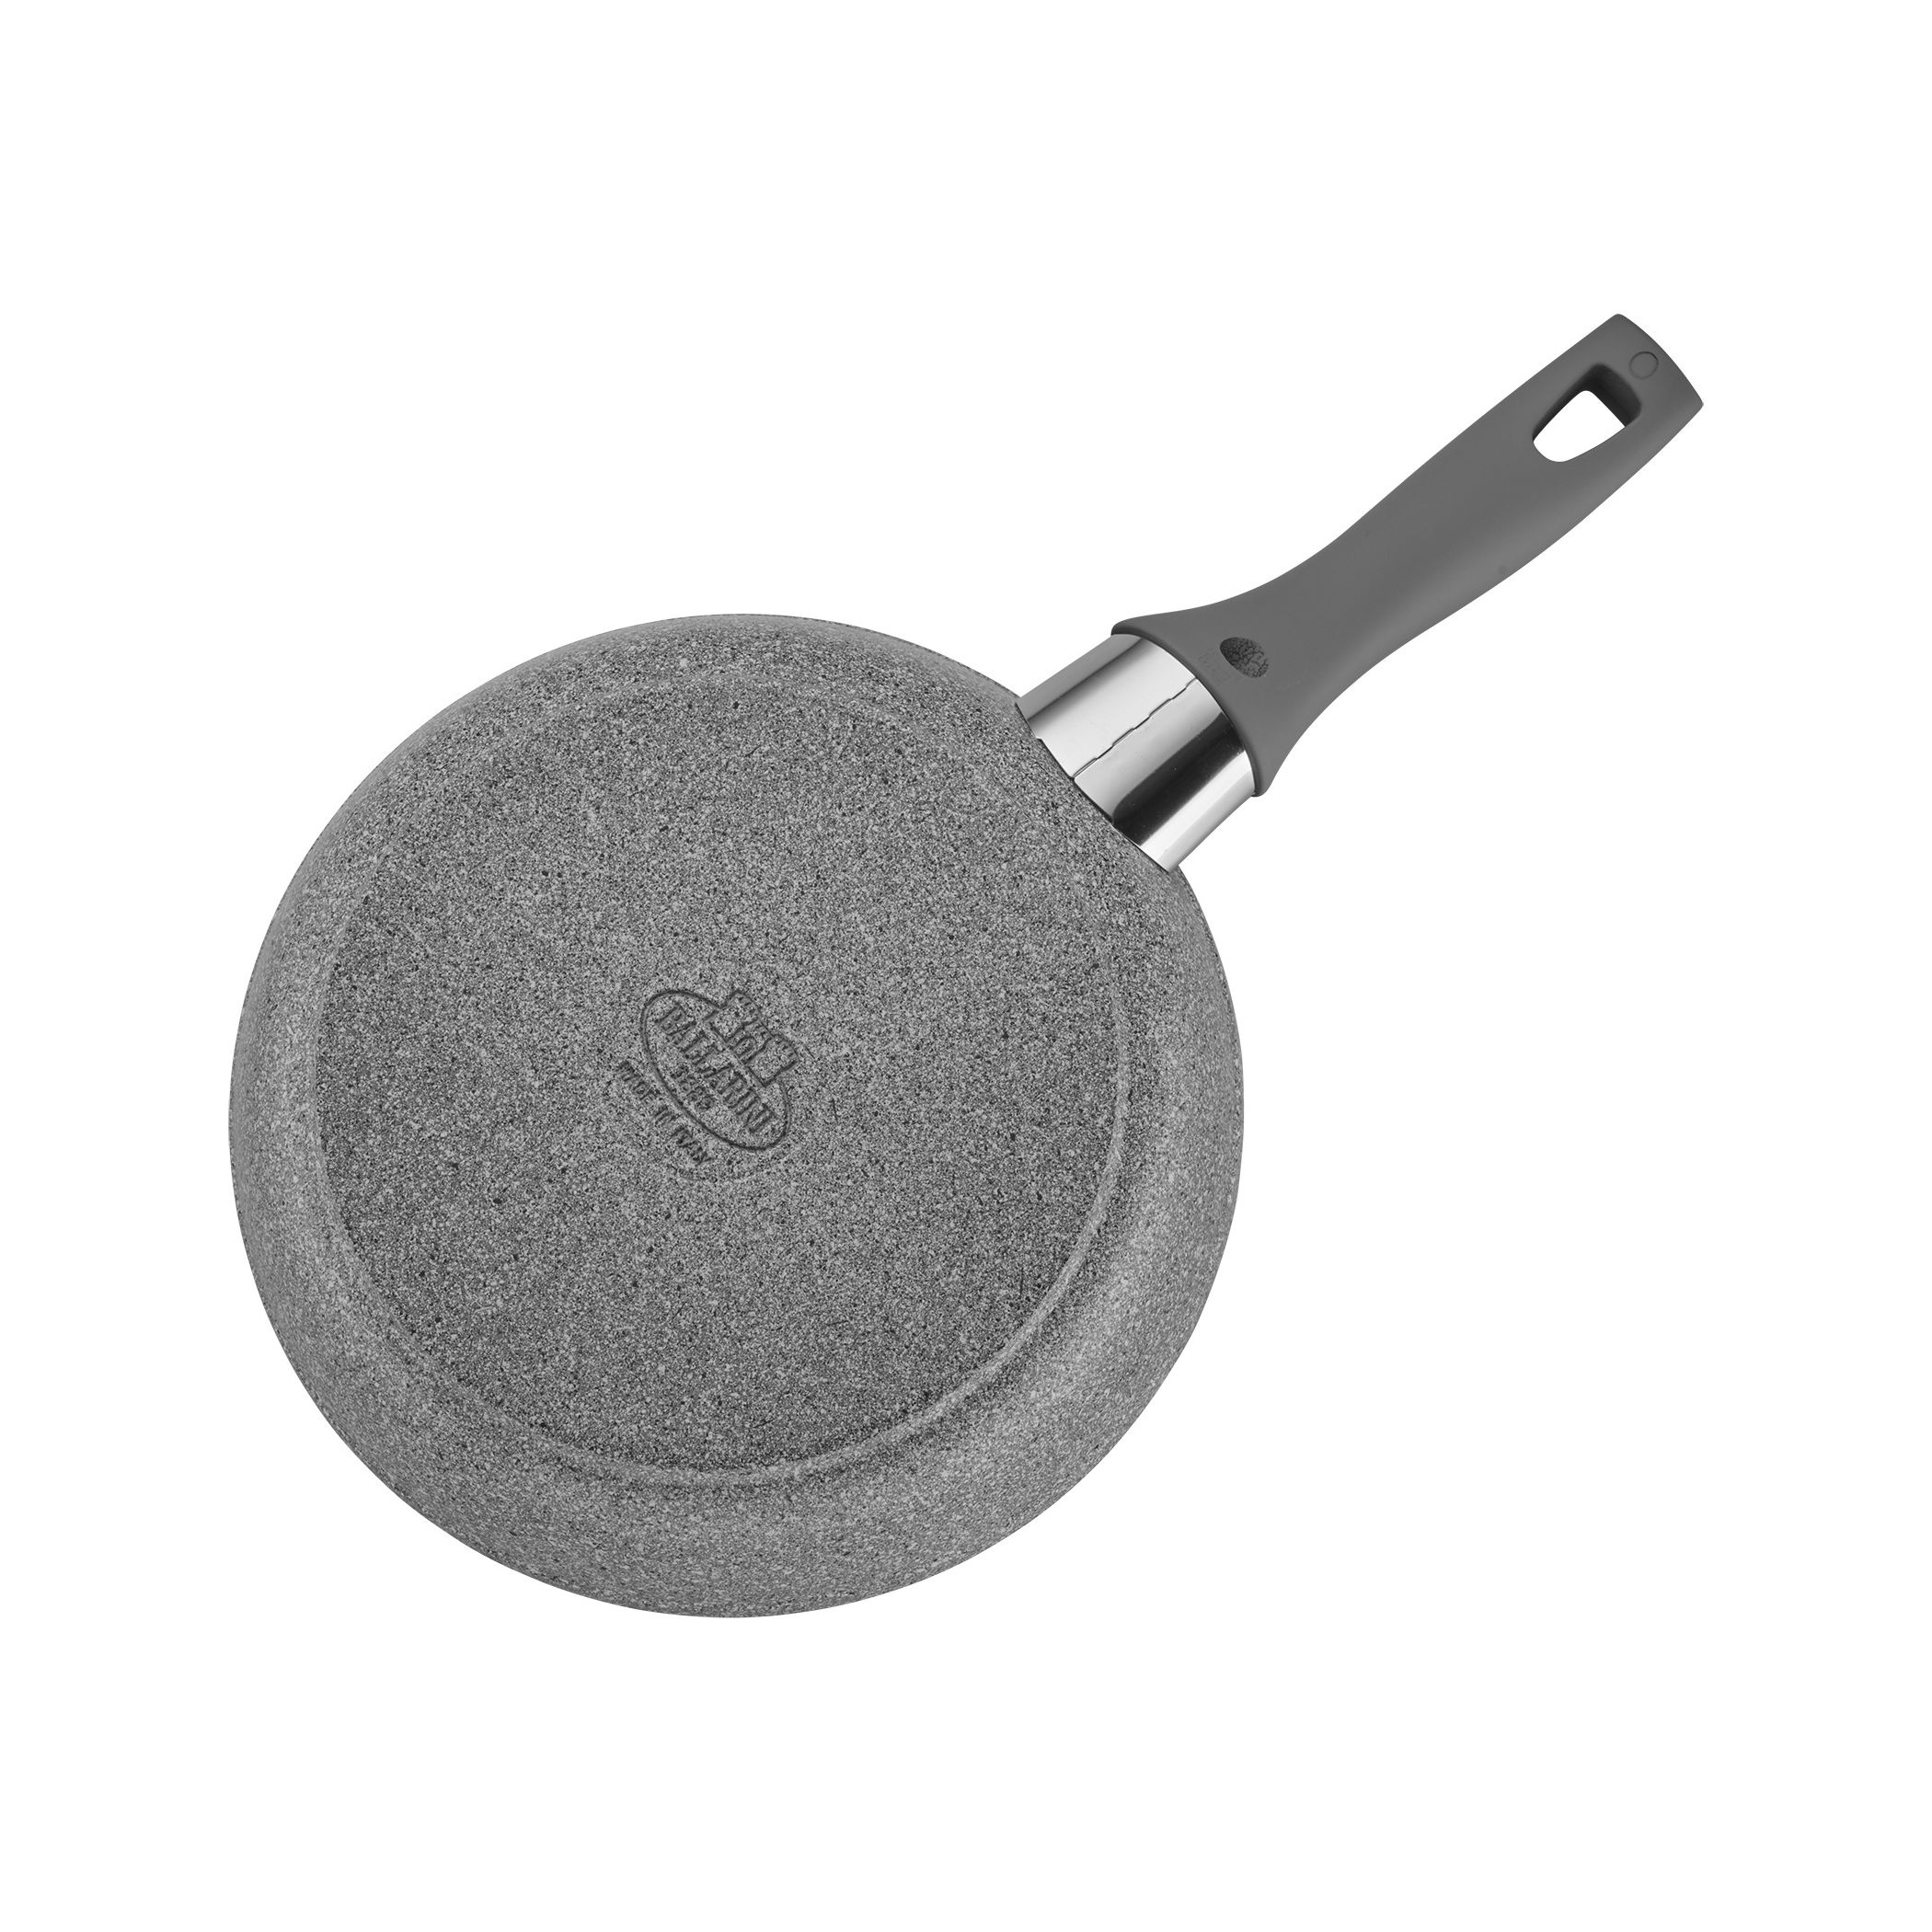 Ballarini Modena 8-inch, Non-Stick, Frying Pan